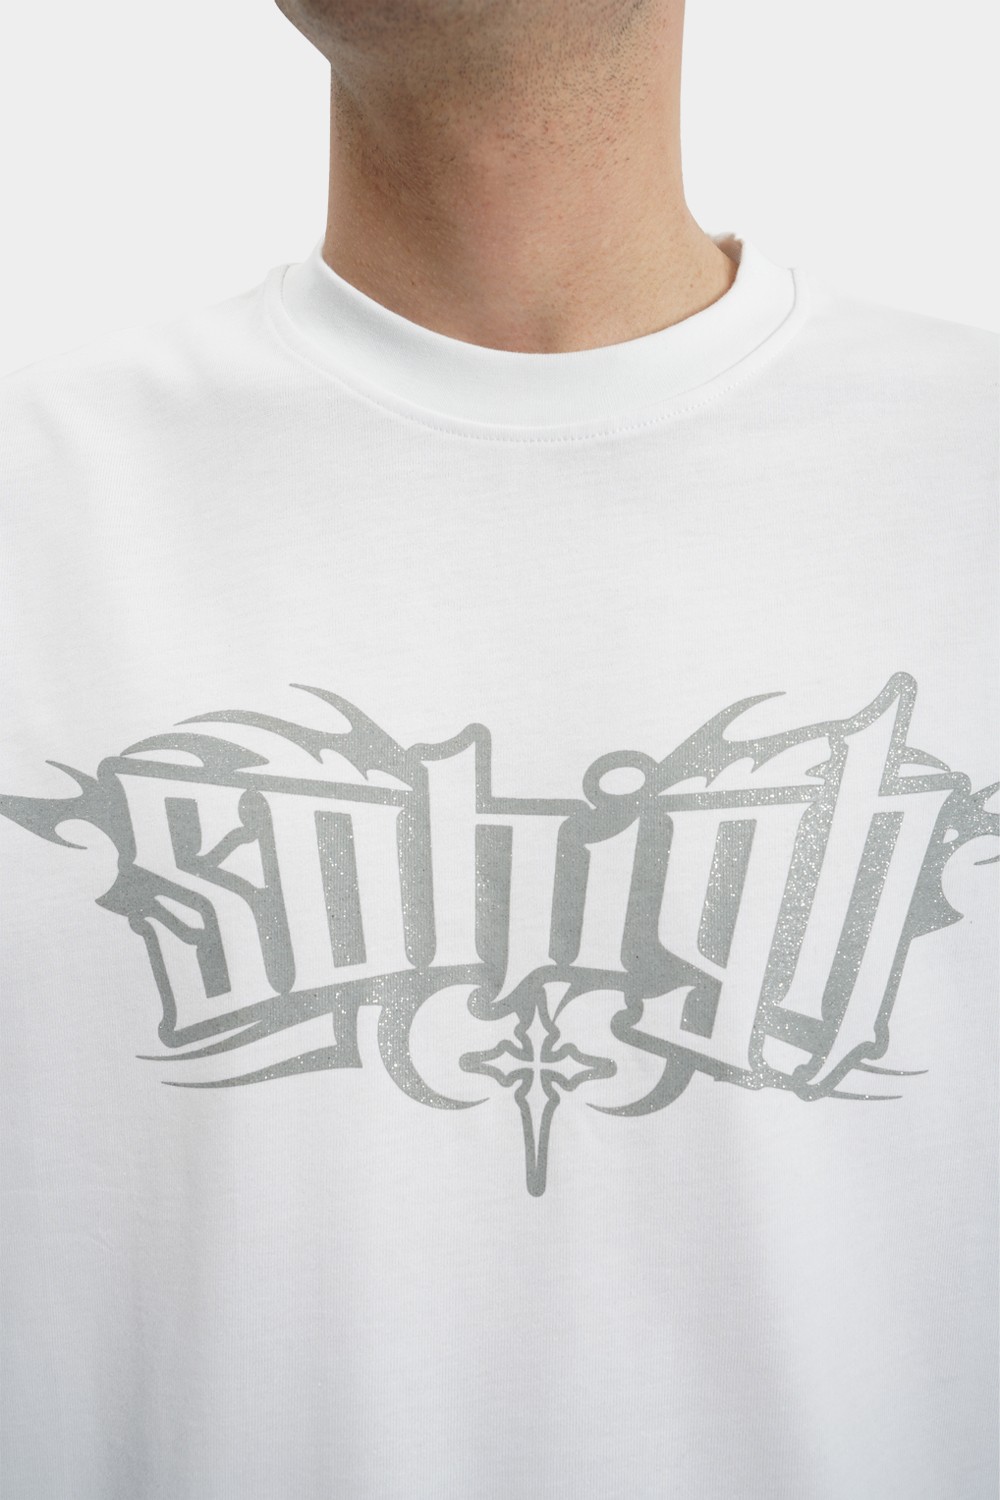 Sohigh Glitter Savage T-Shirt (SHT-16)